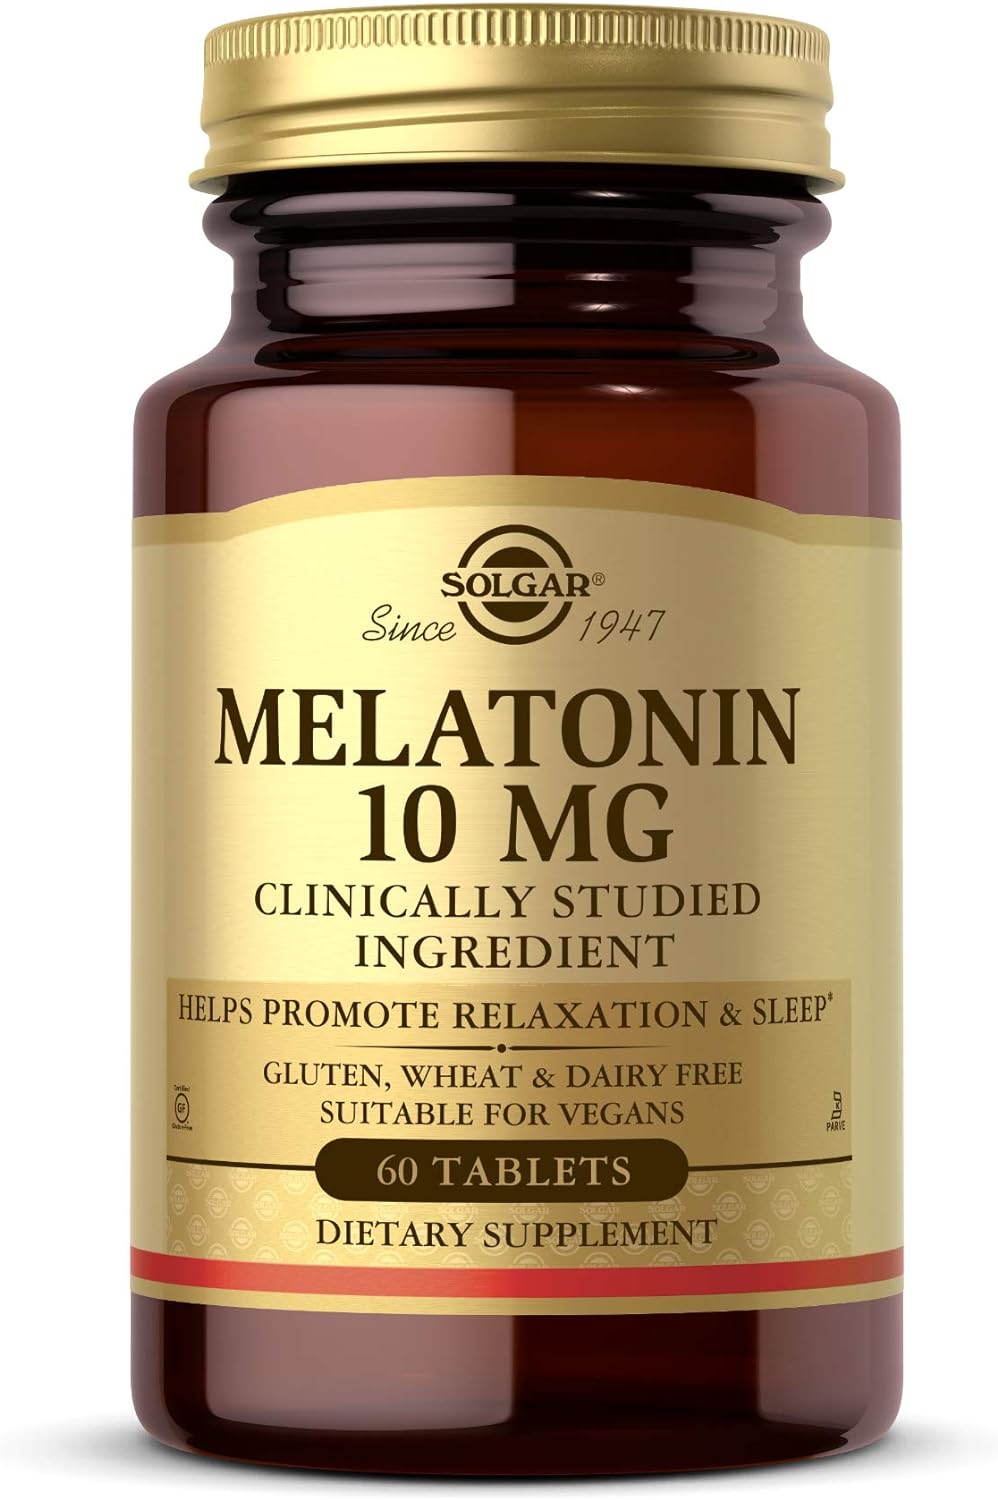 Solgar Melatonin 10mg, 60 Tablets - High-Dosage - Helps Promote Relaxation & Sleep - Clinically-Studied Melatonin - Supports Natural Sleep Cycle - Vegan, Gluten Free, Dairy Free, Kosher - 60 Servings